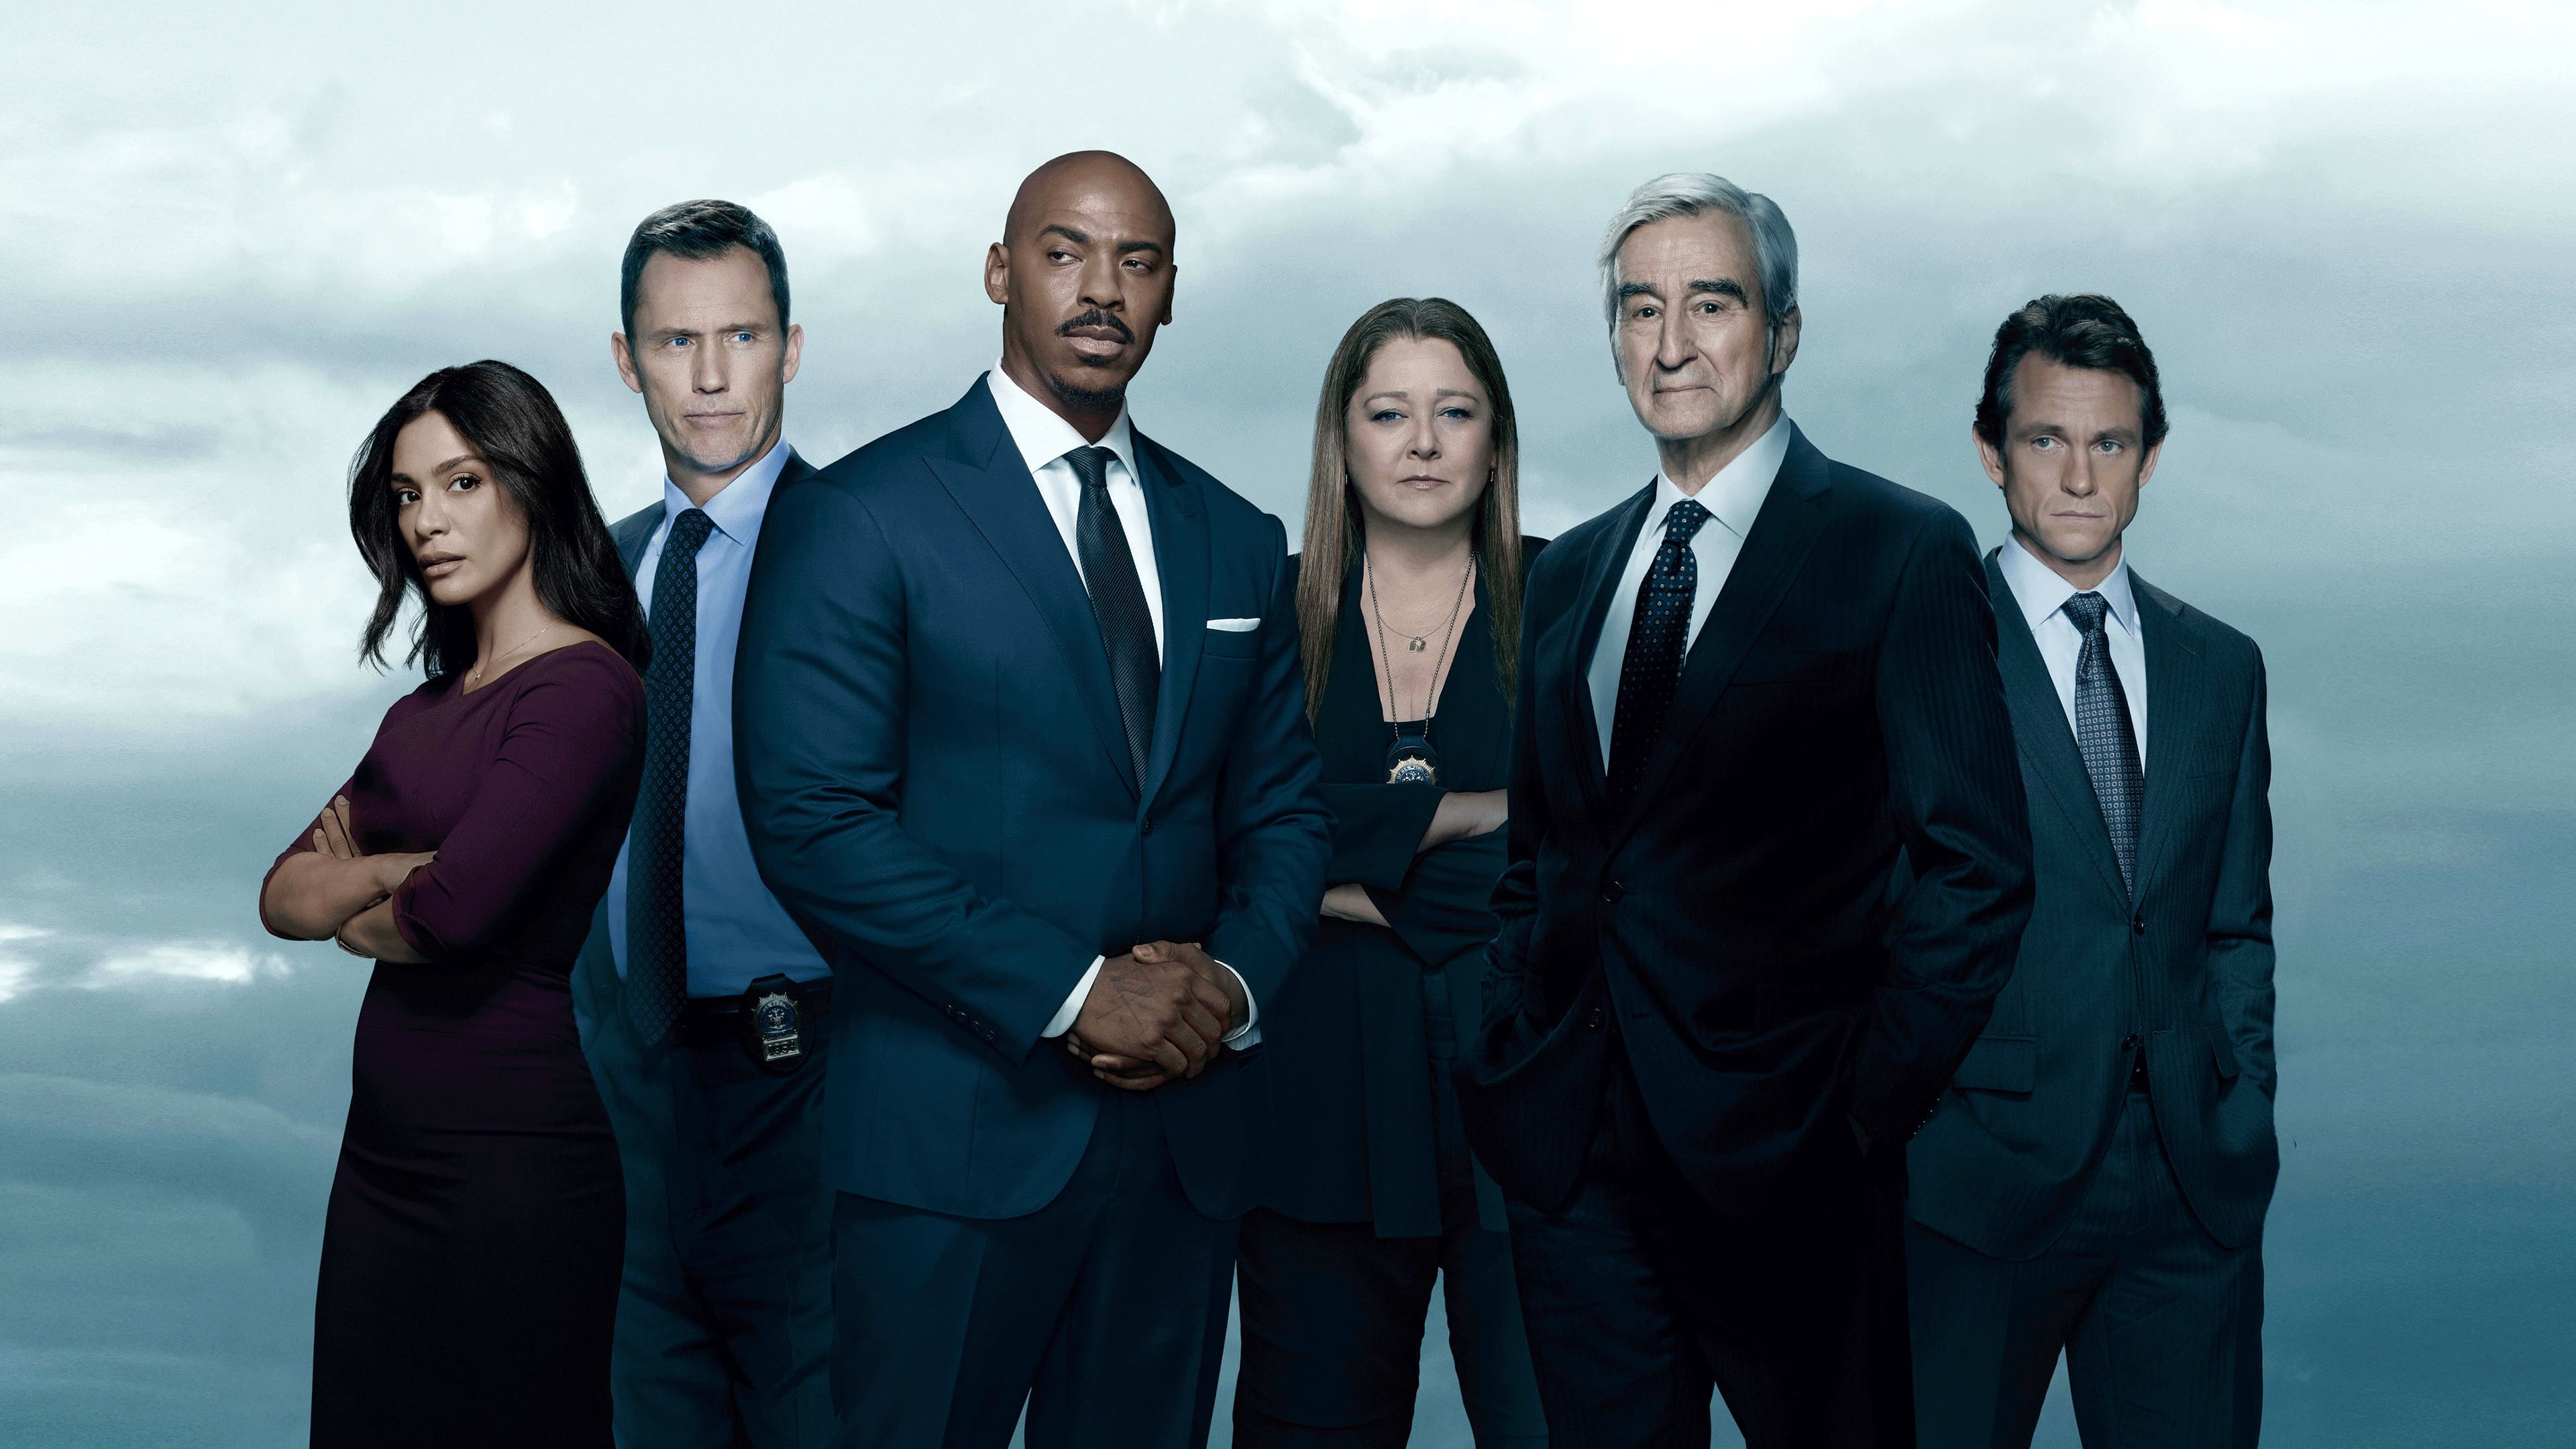 Law & Order - Season 14 Episode 23